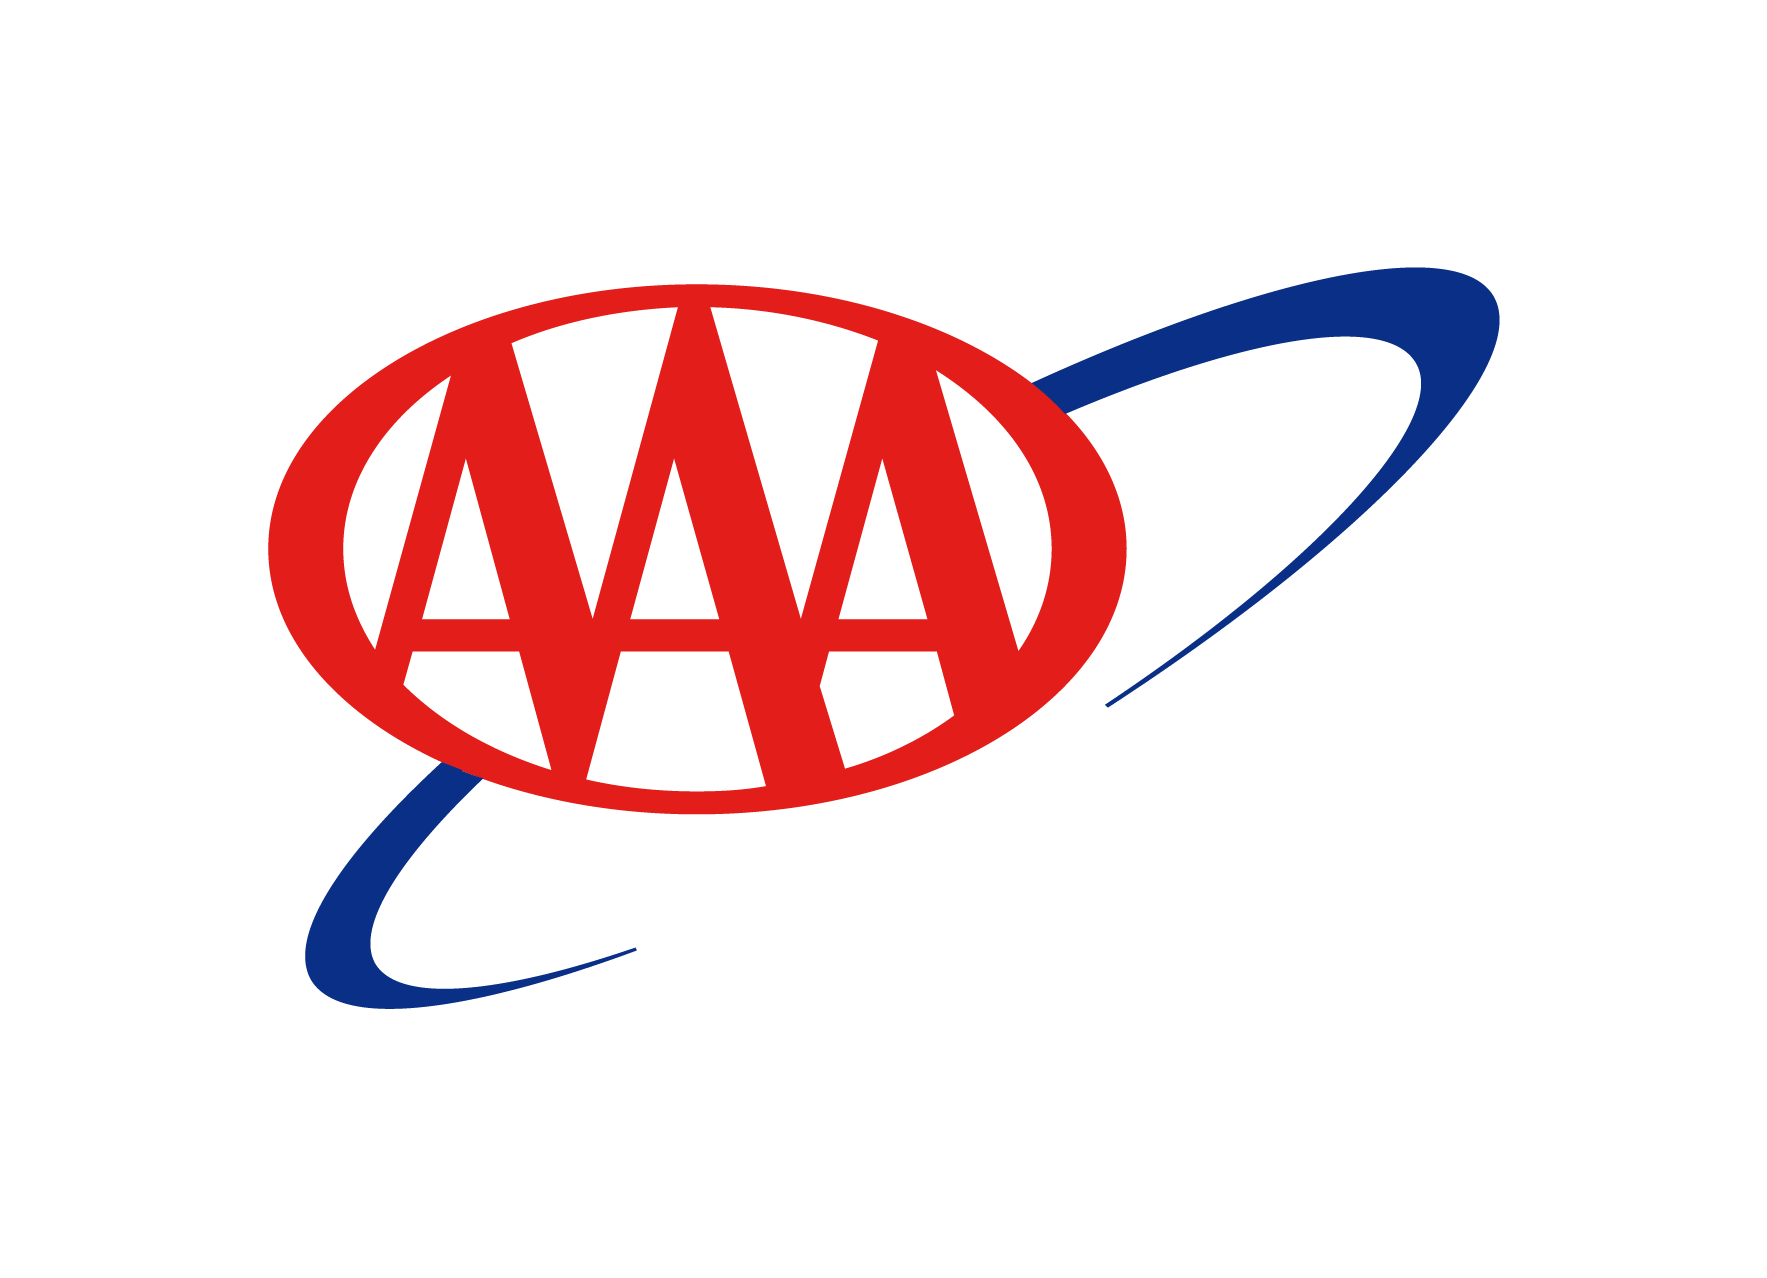 AAA-The Auto Club Group